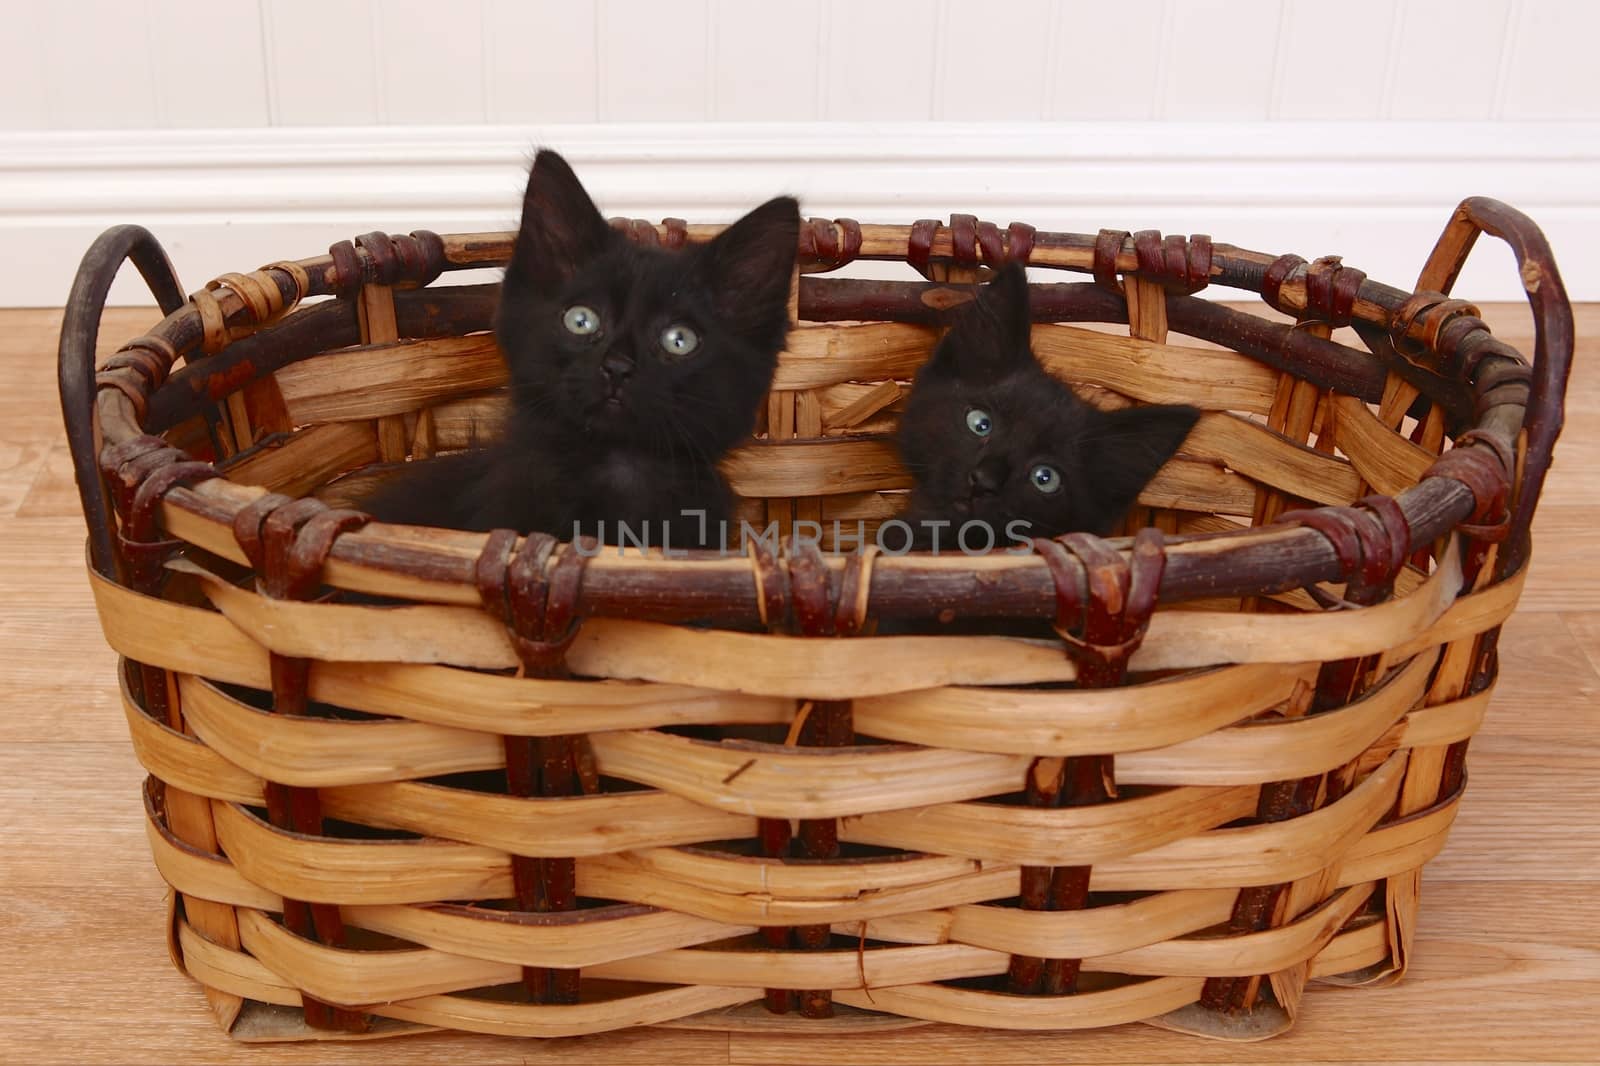 Adorable Kittens Inside a Basket on White